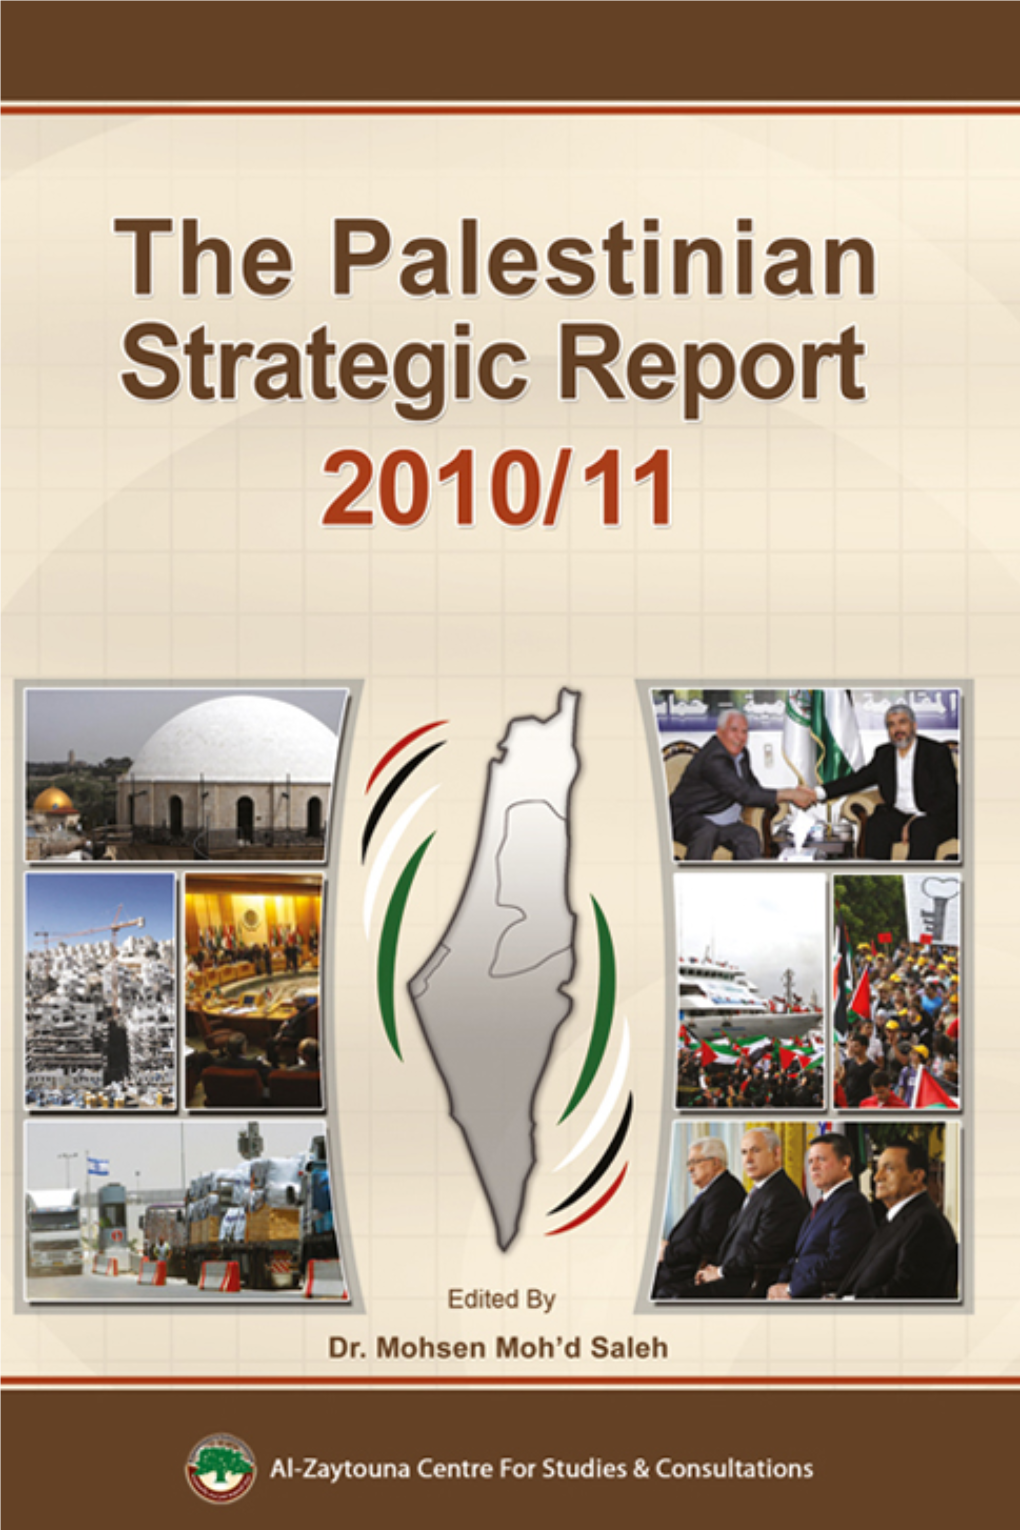 Full Book: the Palestinian Strategic Report 2010/11